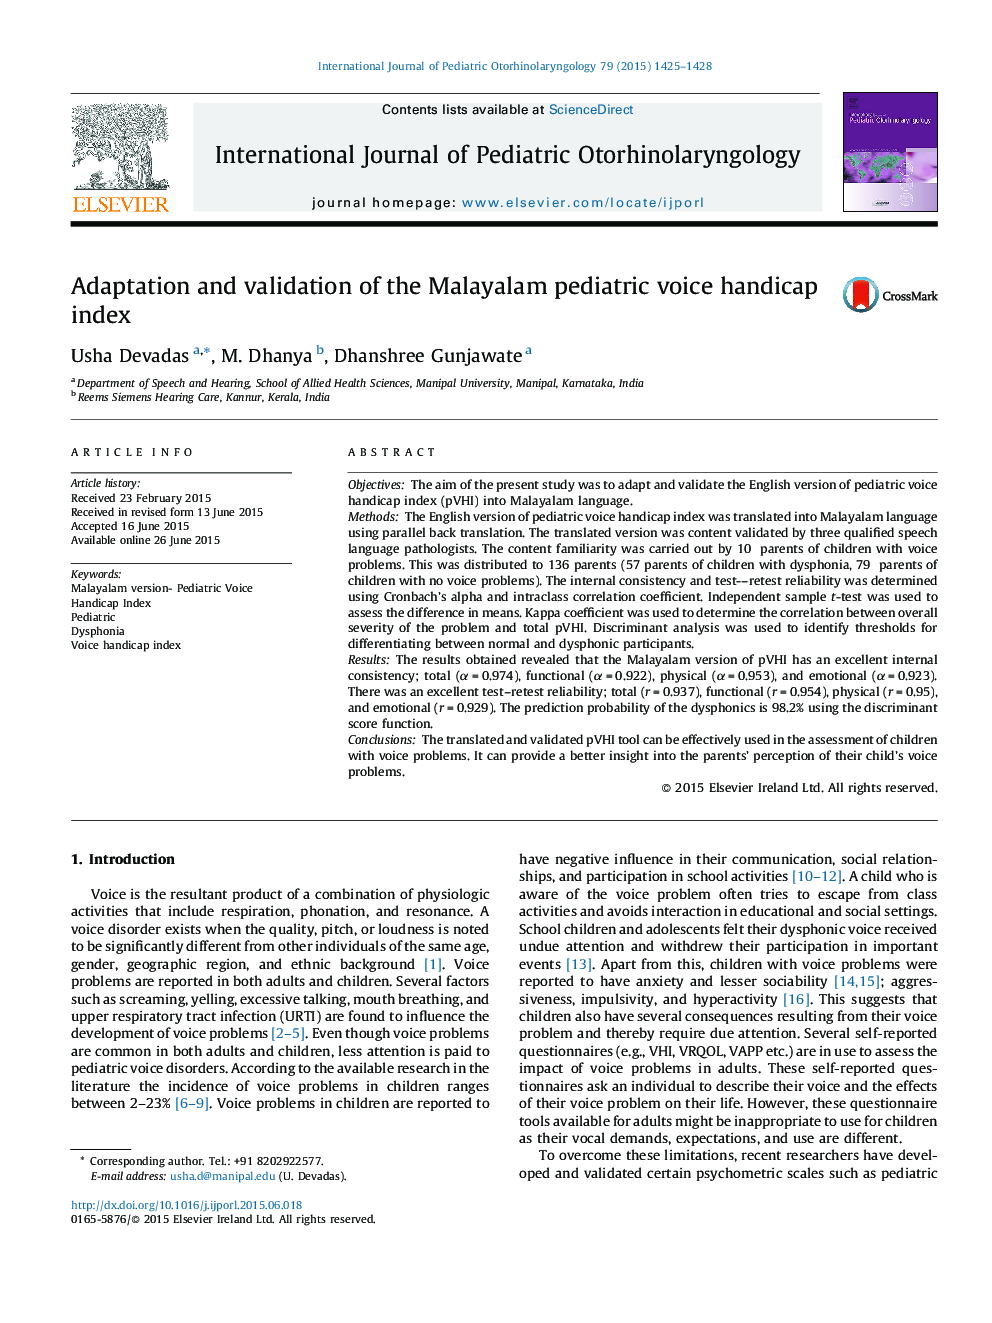 Adaptation and validation of the Malayalam pediatric voice handicap index